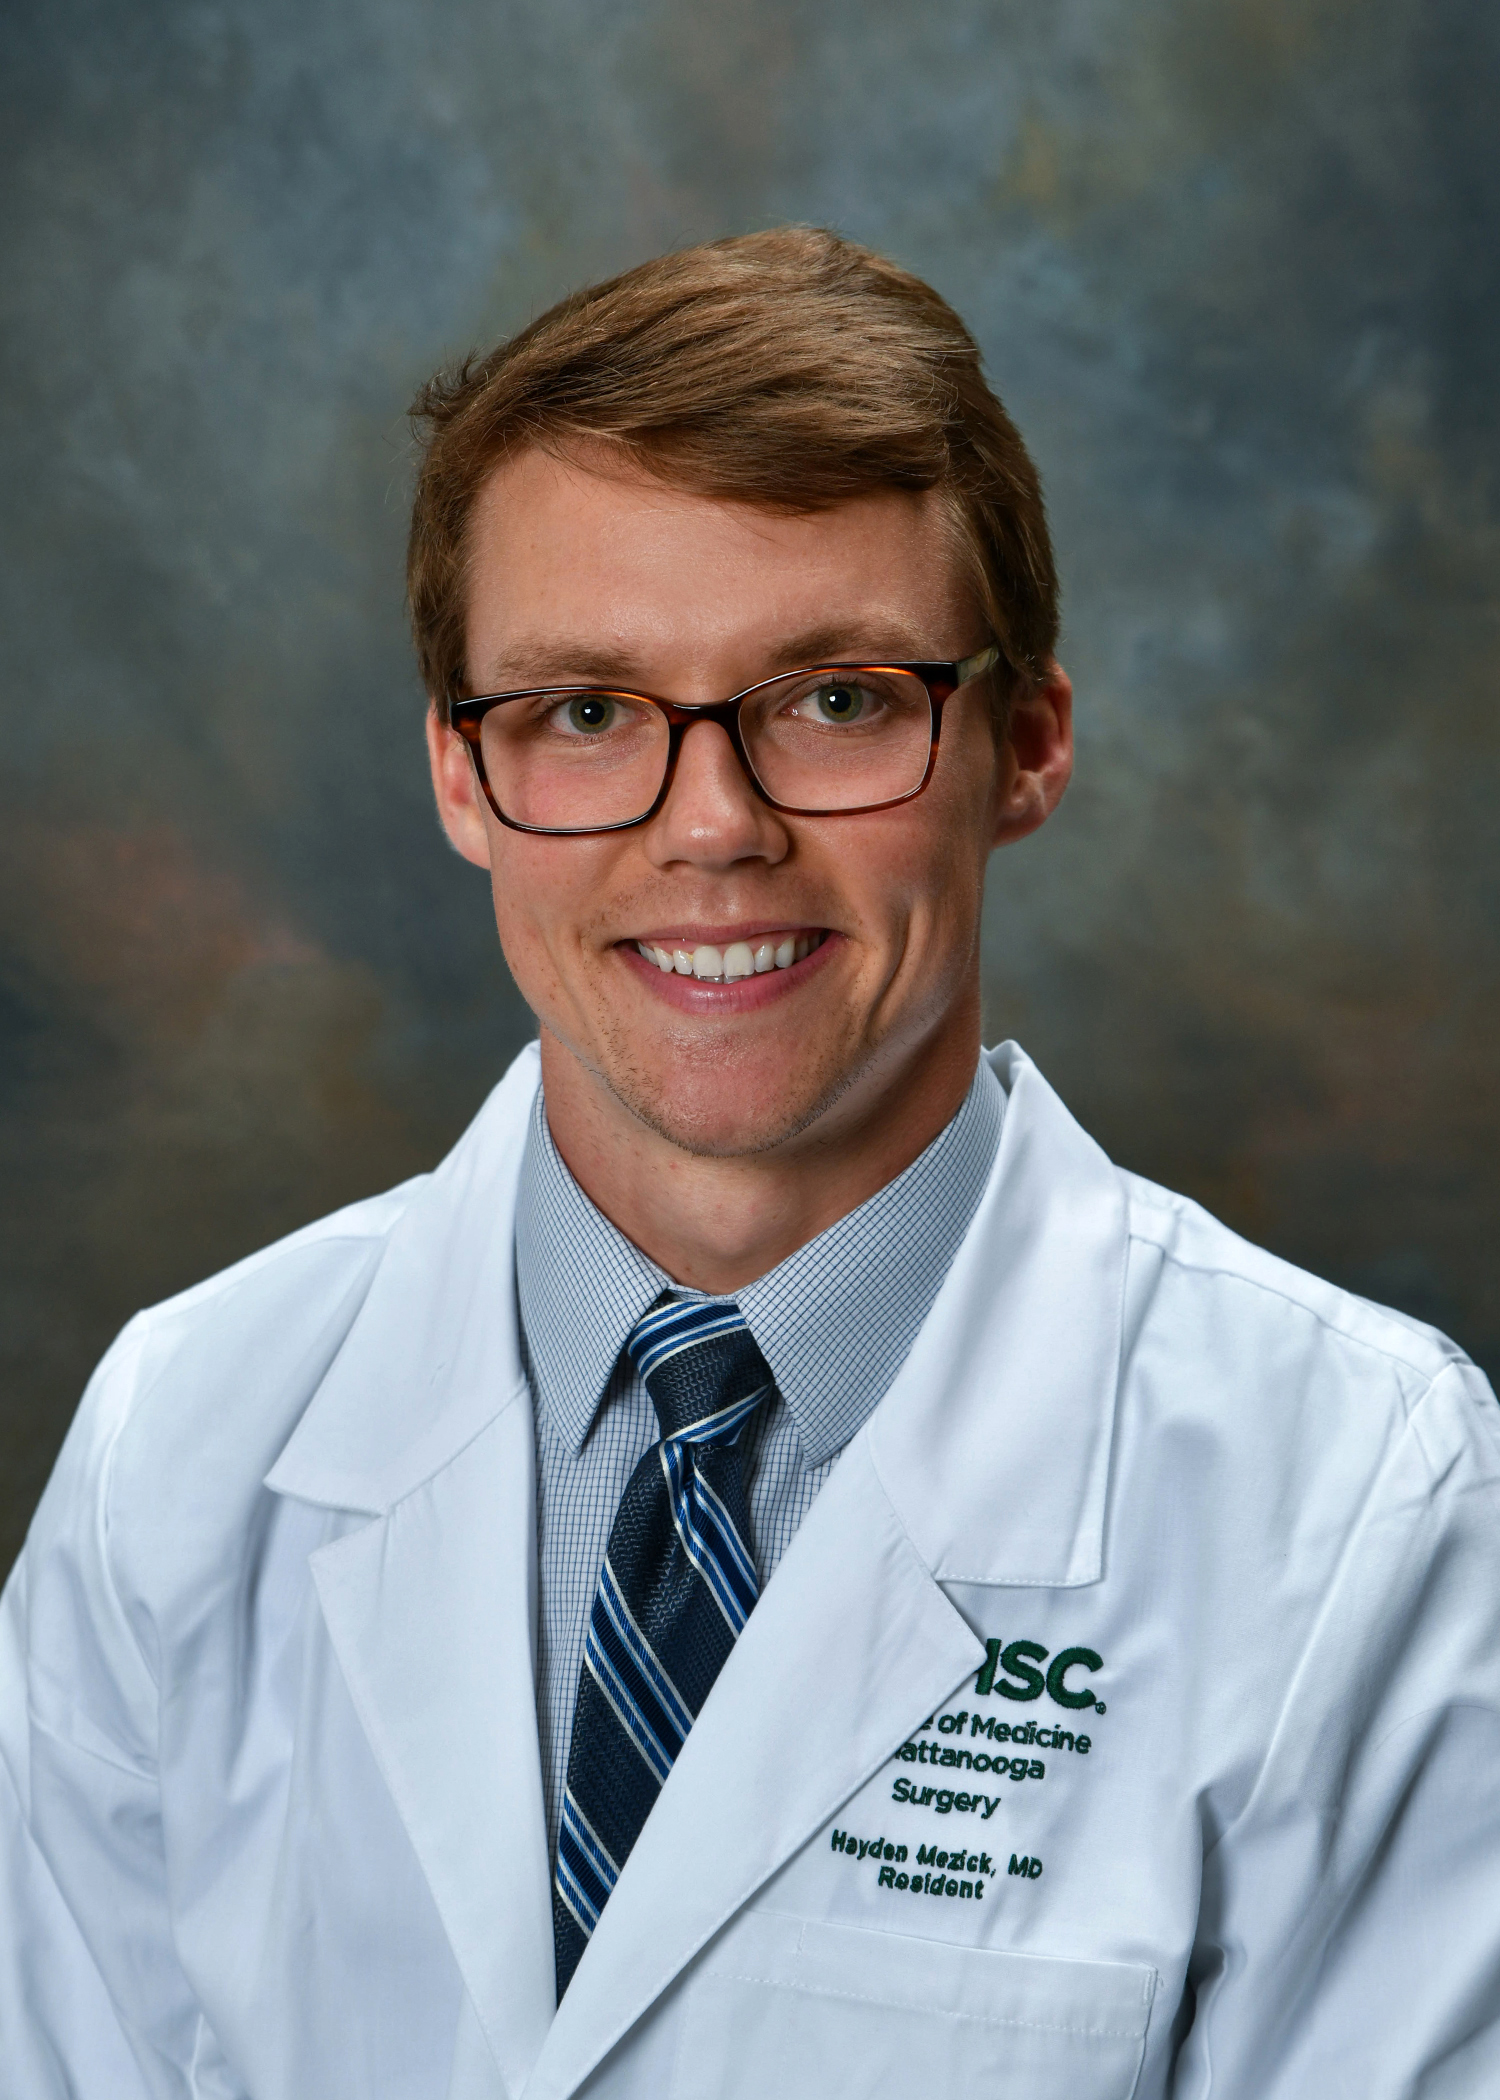 Hayden Mezick, MD, Surgery Resident